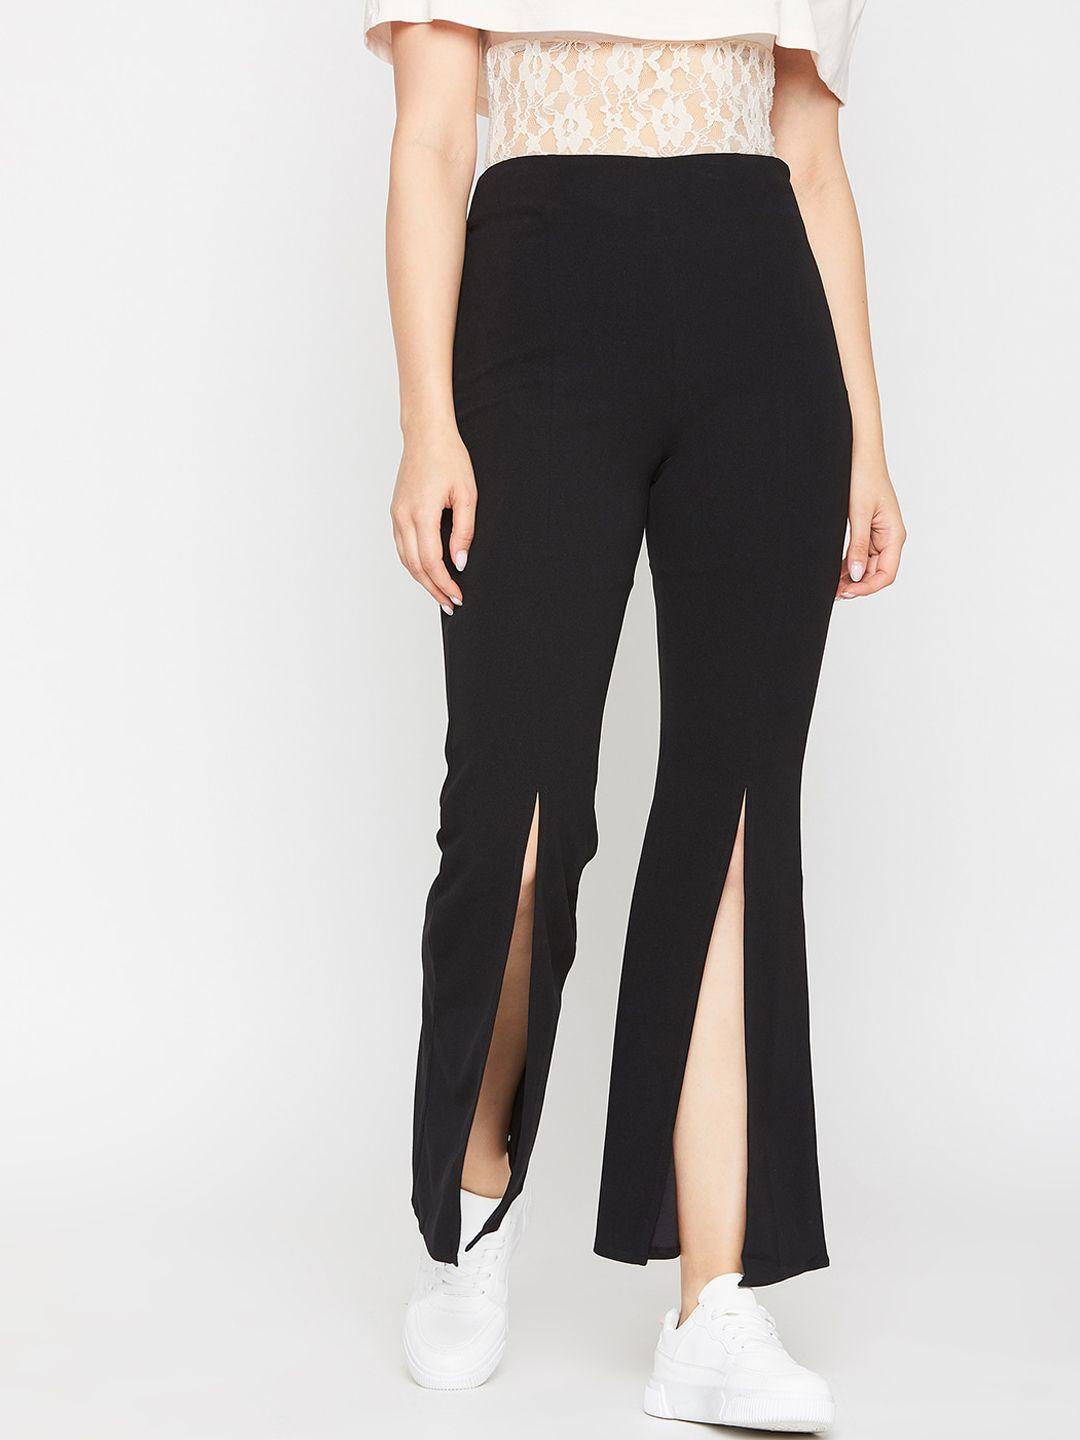 Marie Claire Women Black Slim Fit Front Slits Trousers